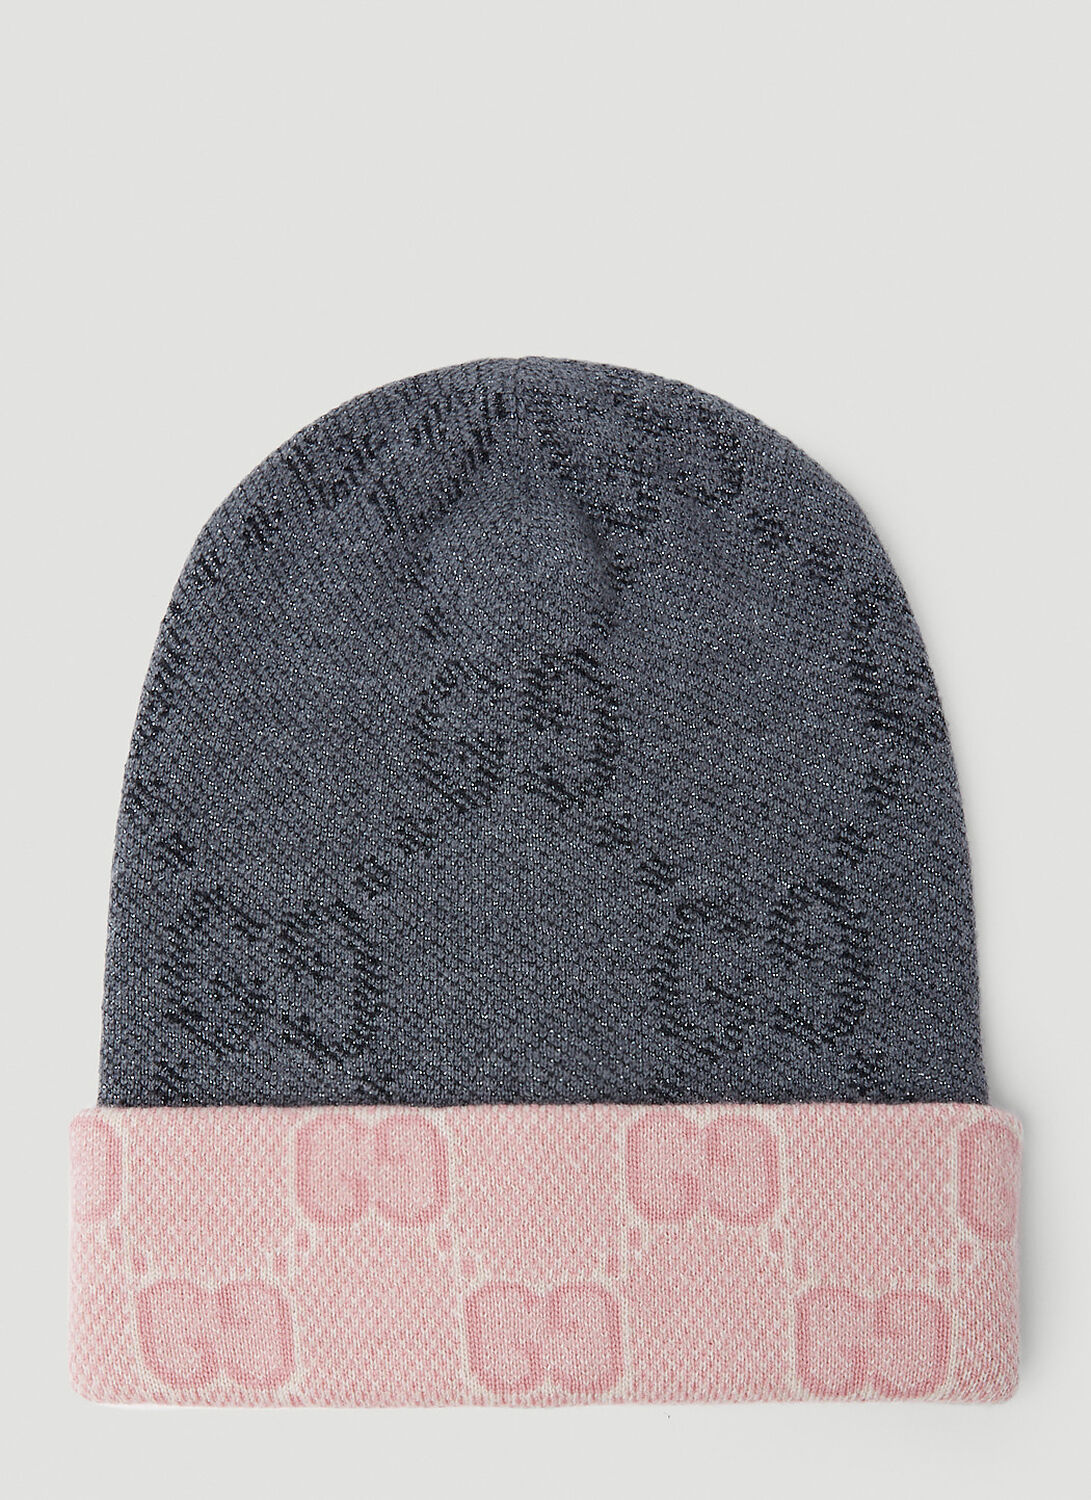 Dw Boutique - Pink Gucci Bonnet Available Now On Our